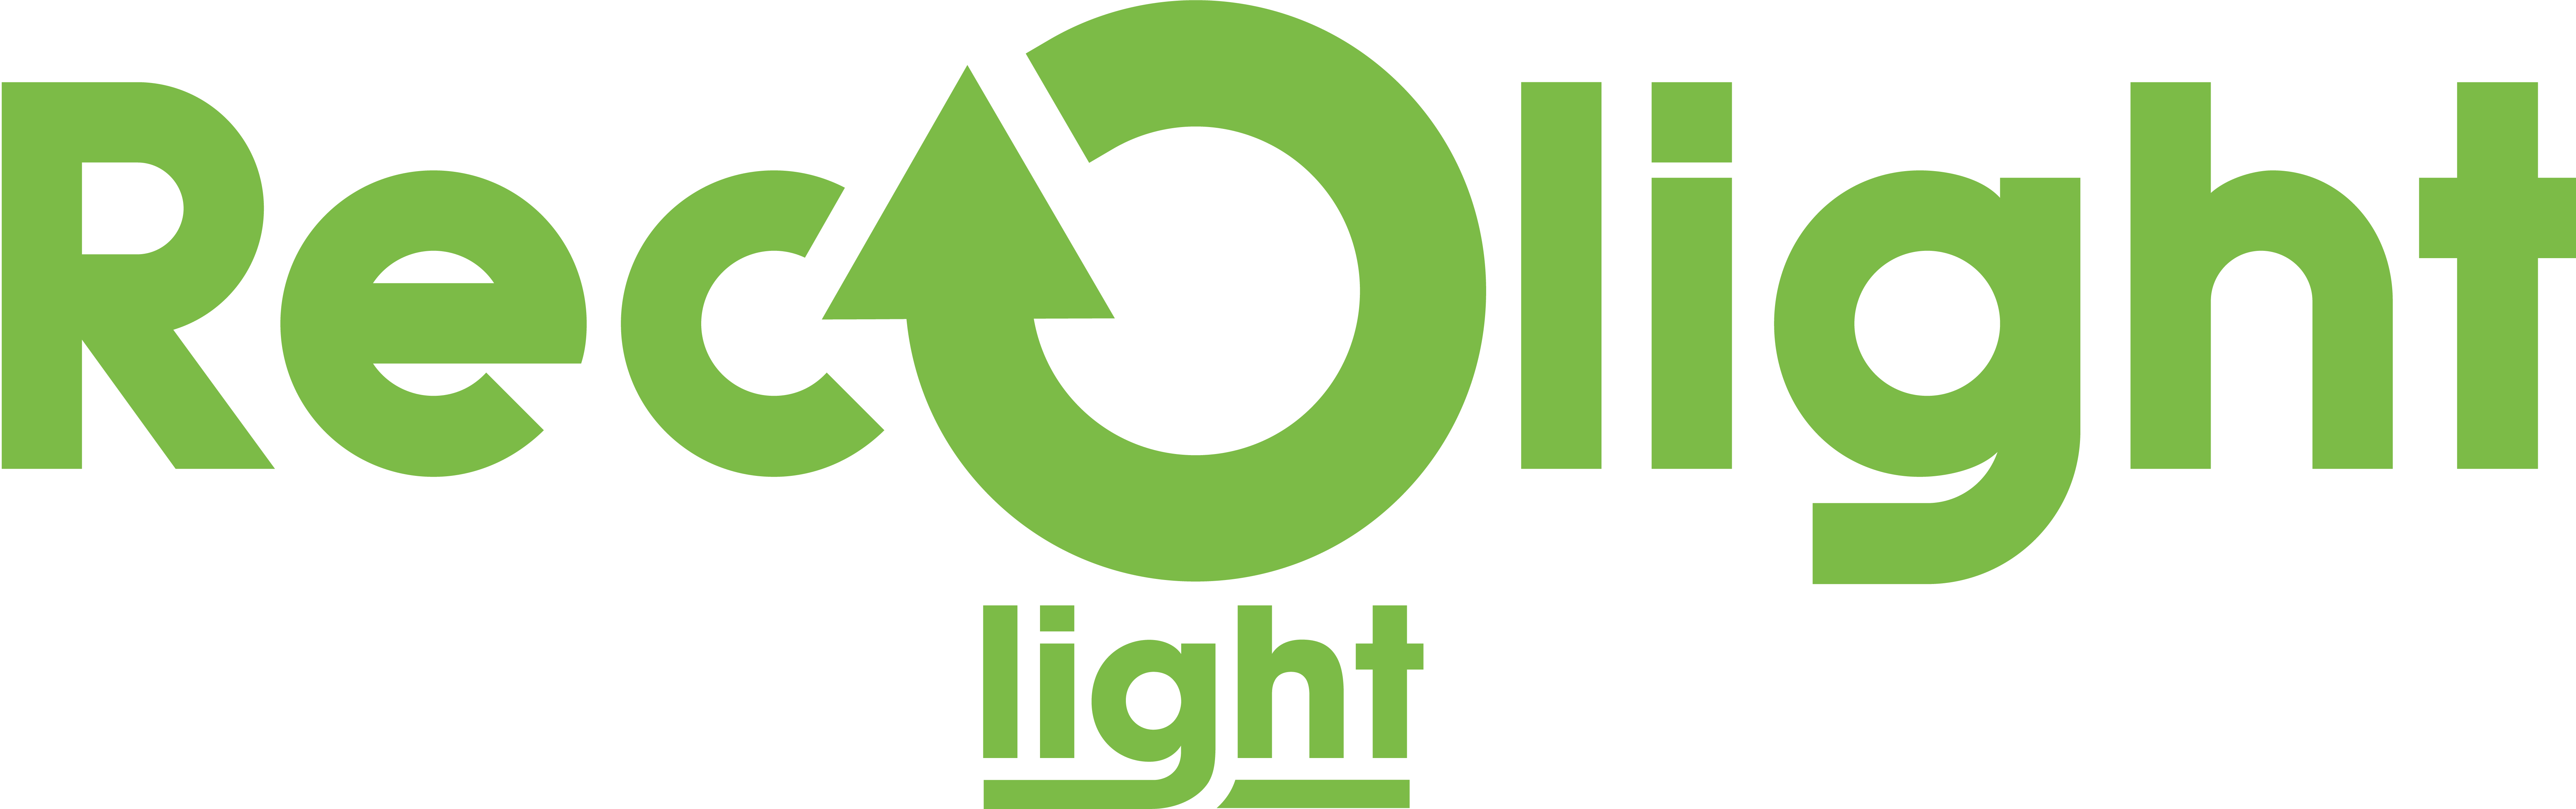 Lighting clipart logo.  best lamp recolight